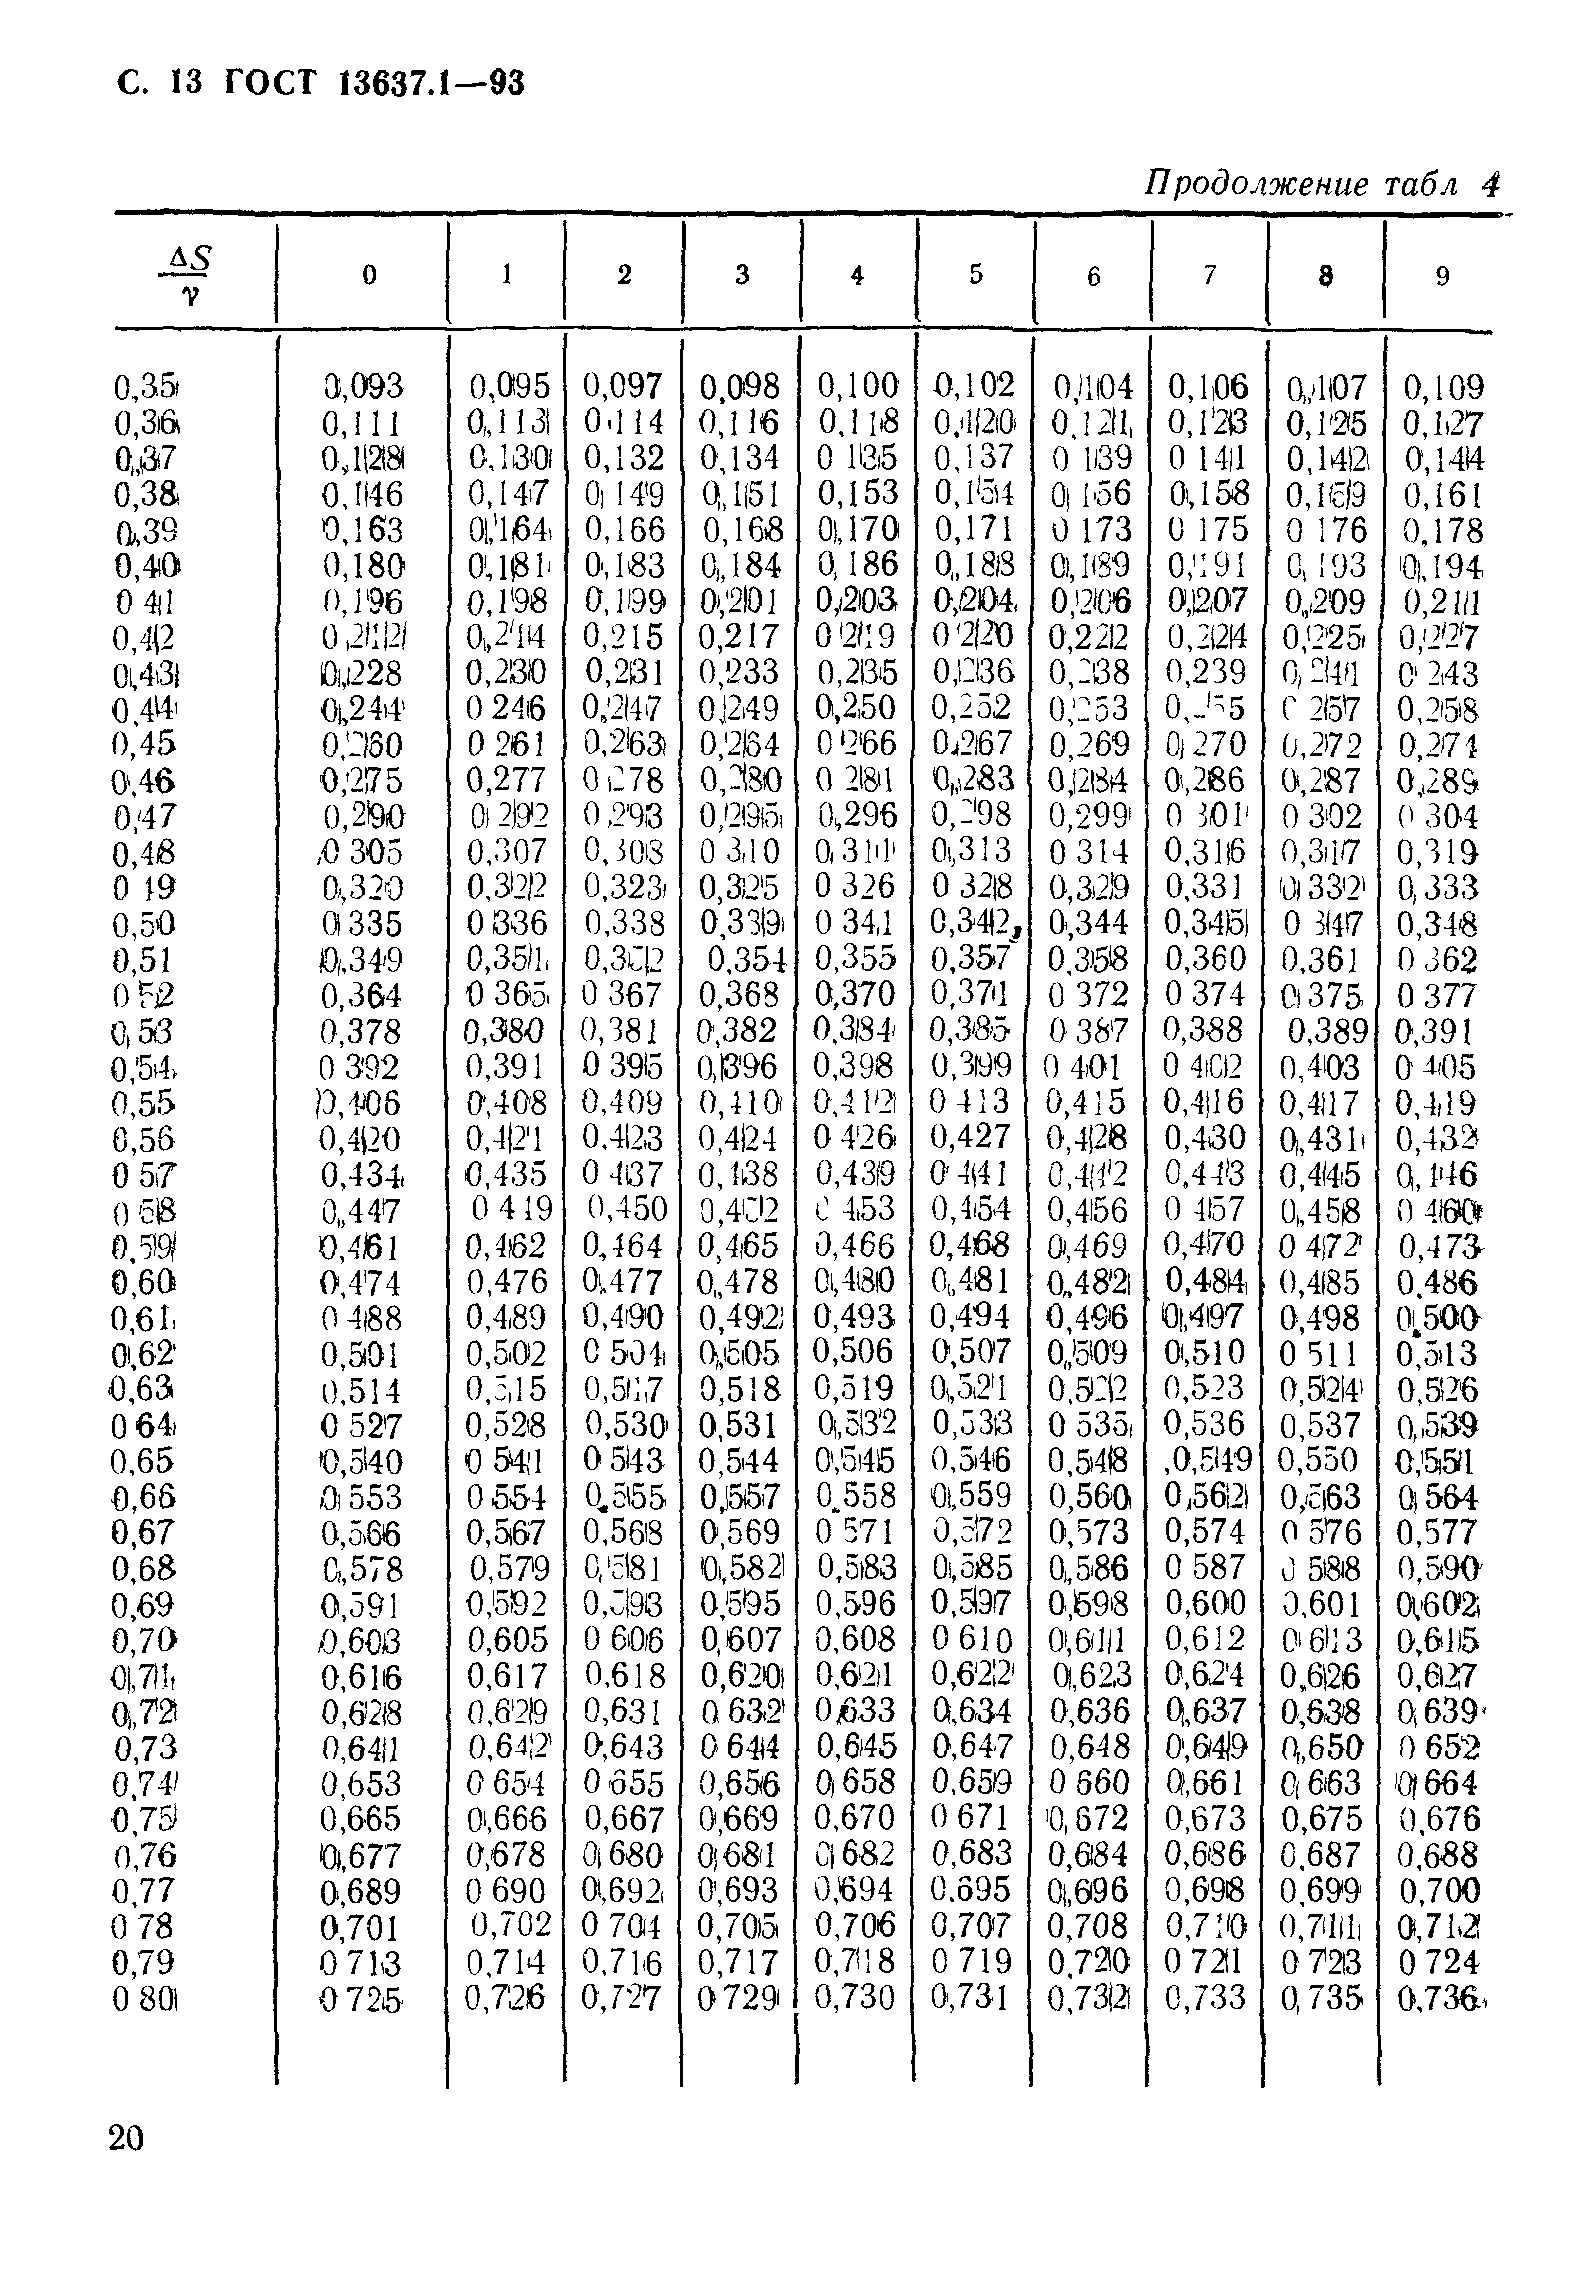 ГОСТ 13637.1-93